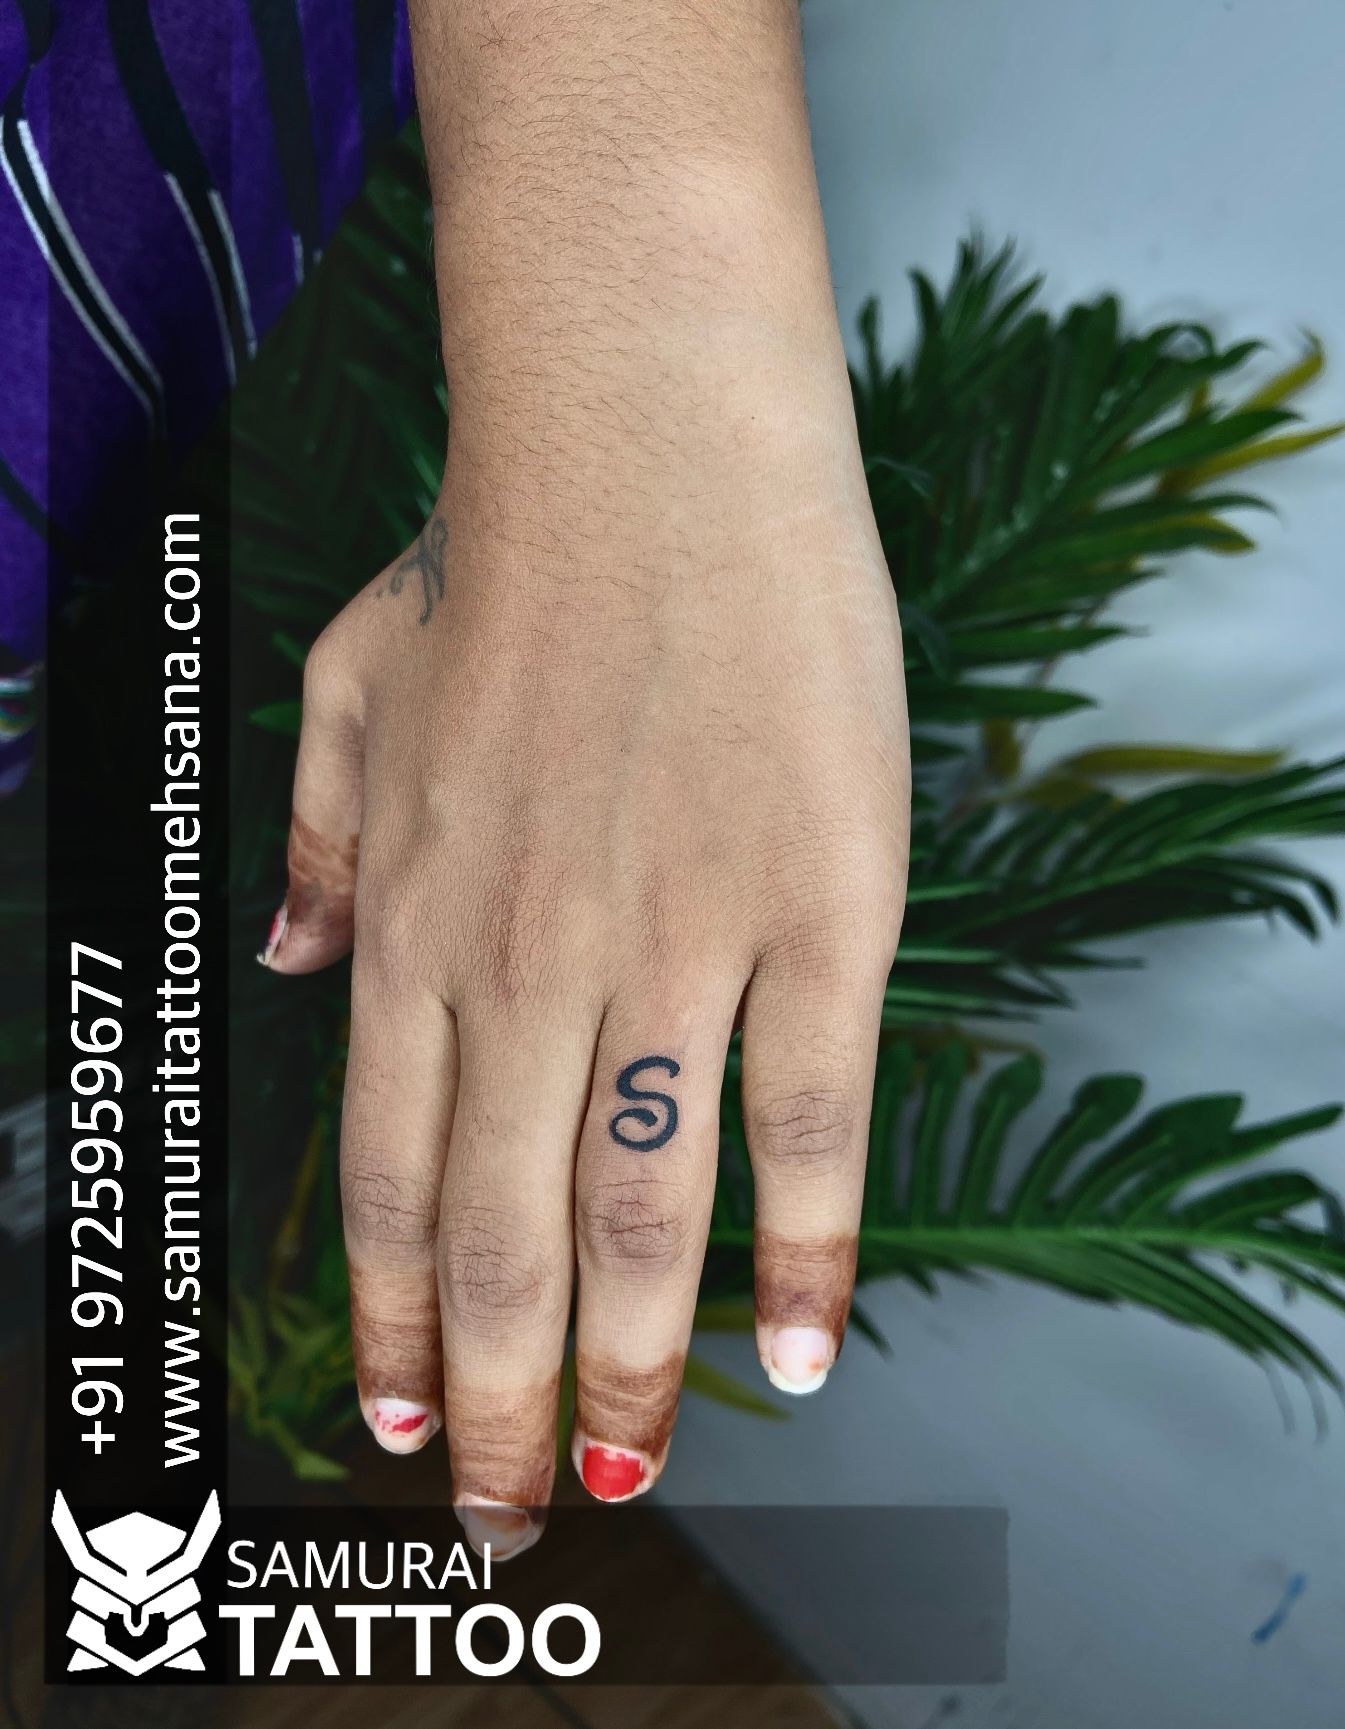 s tattoo || s letter tattoo designs ❤️ s name tattoo - YouTube